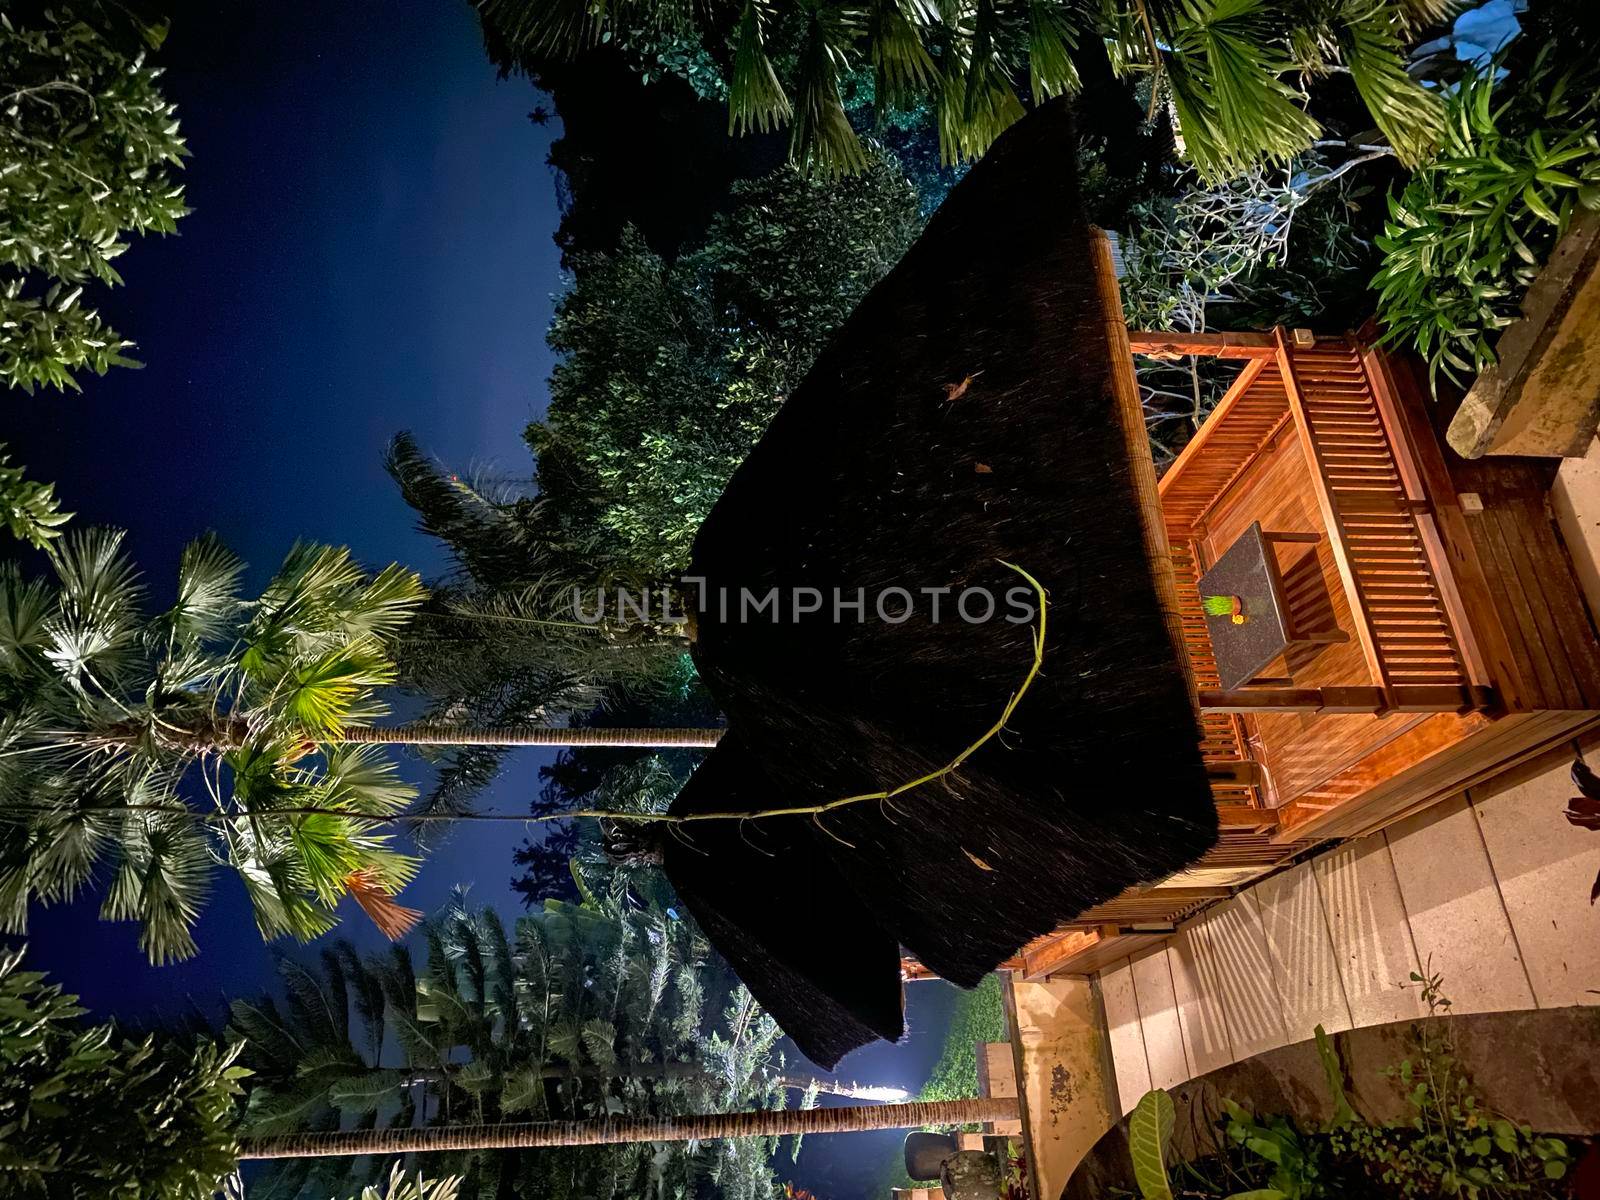 Luxury Villa at night time Ubud Bali Indonesia- stock photo. High quality photo